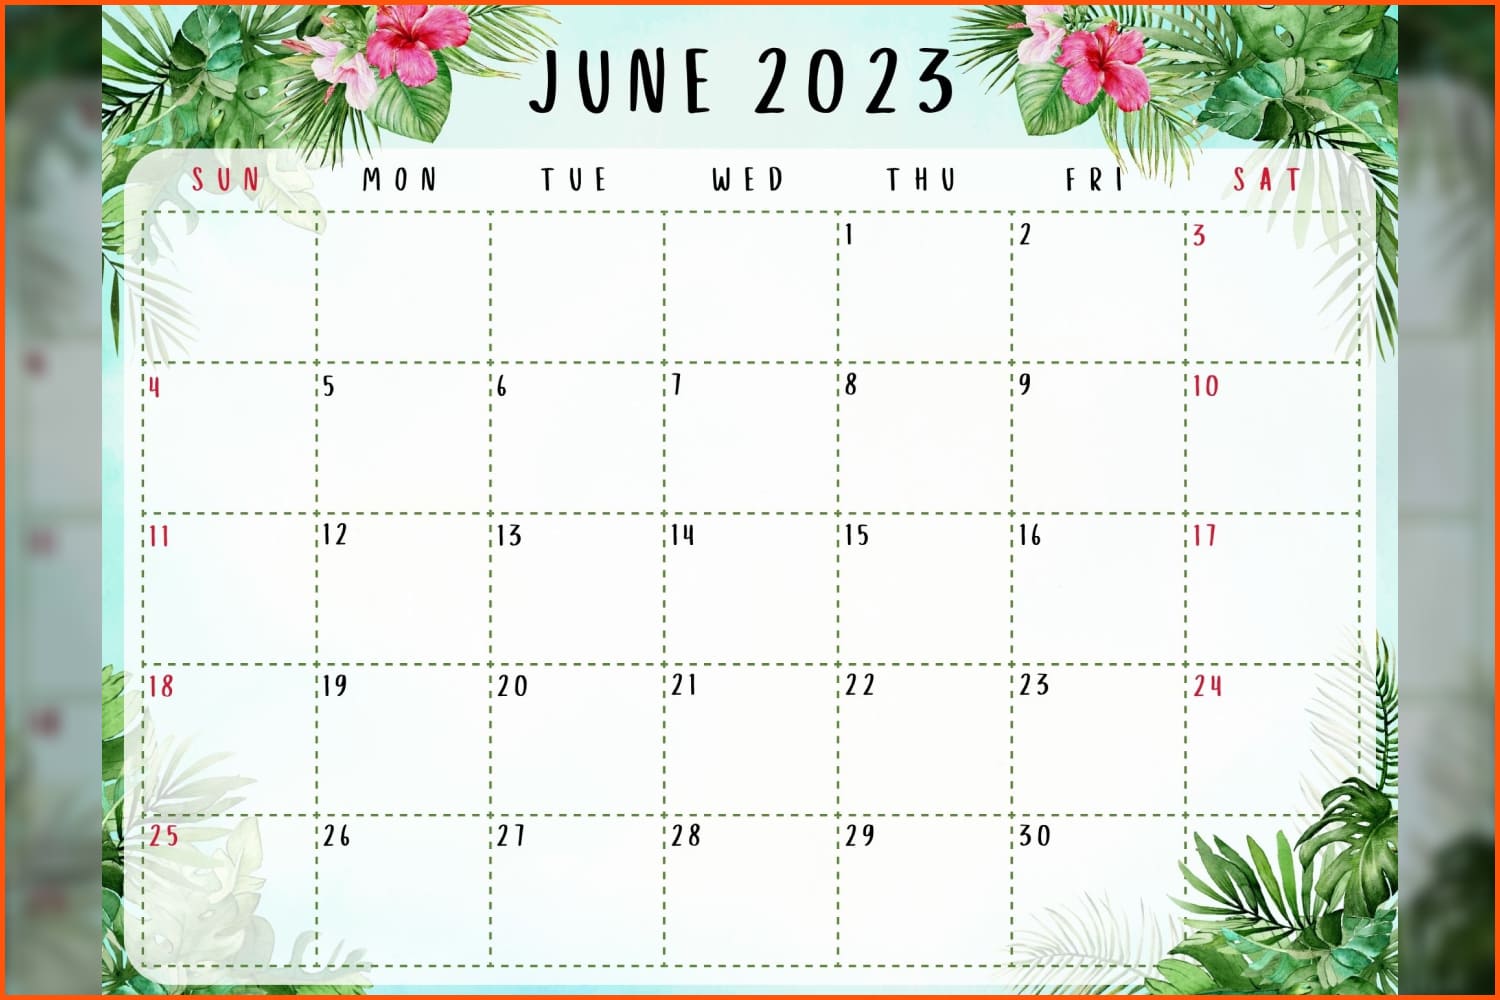 Calendar for June framed by flowers and green leaves.